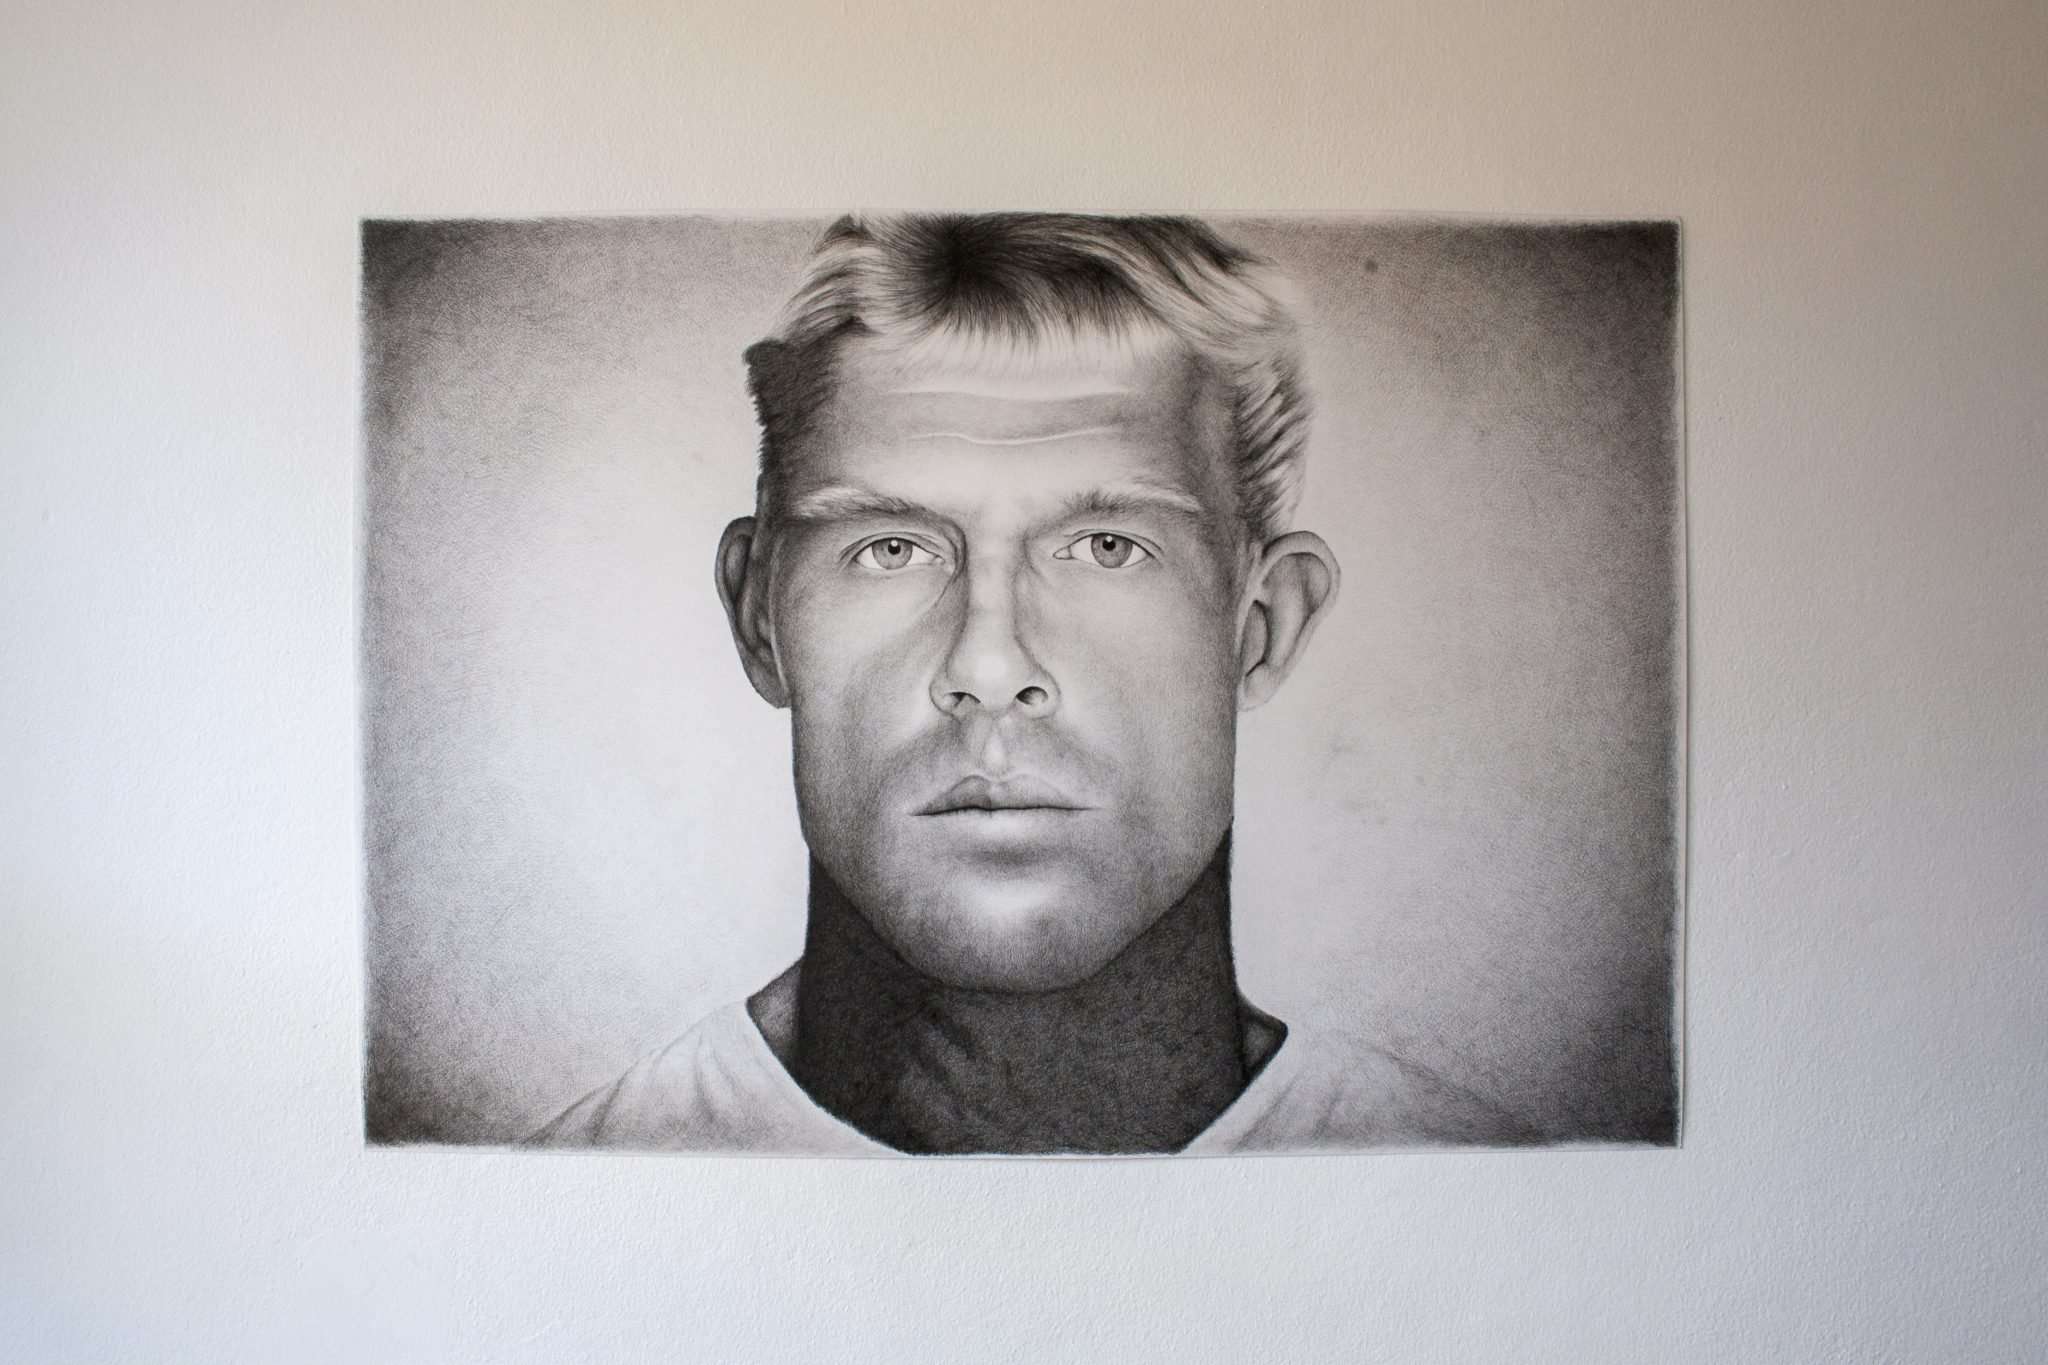 Mick Fanning portrait by artist Dean Spinks